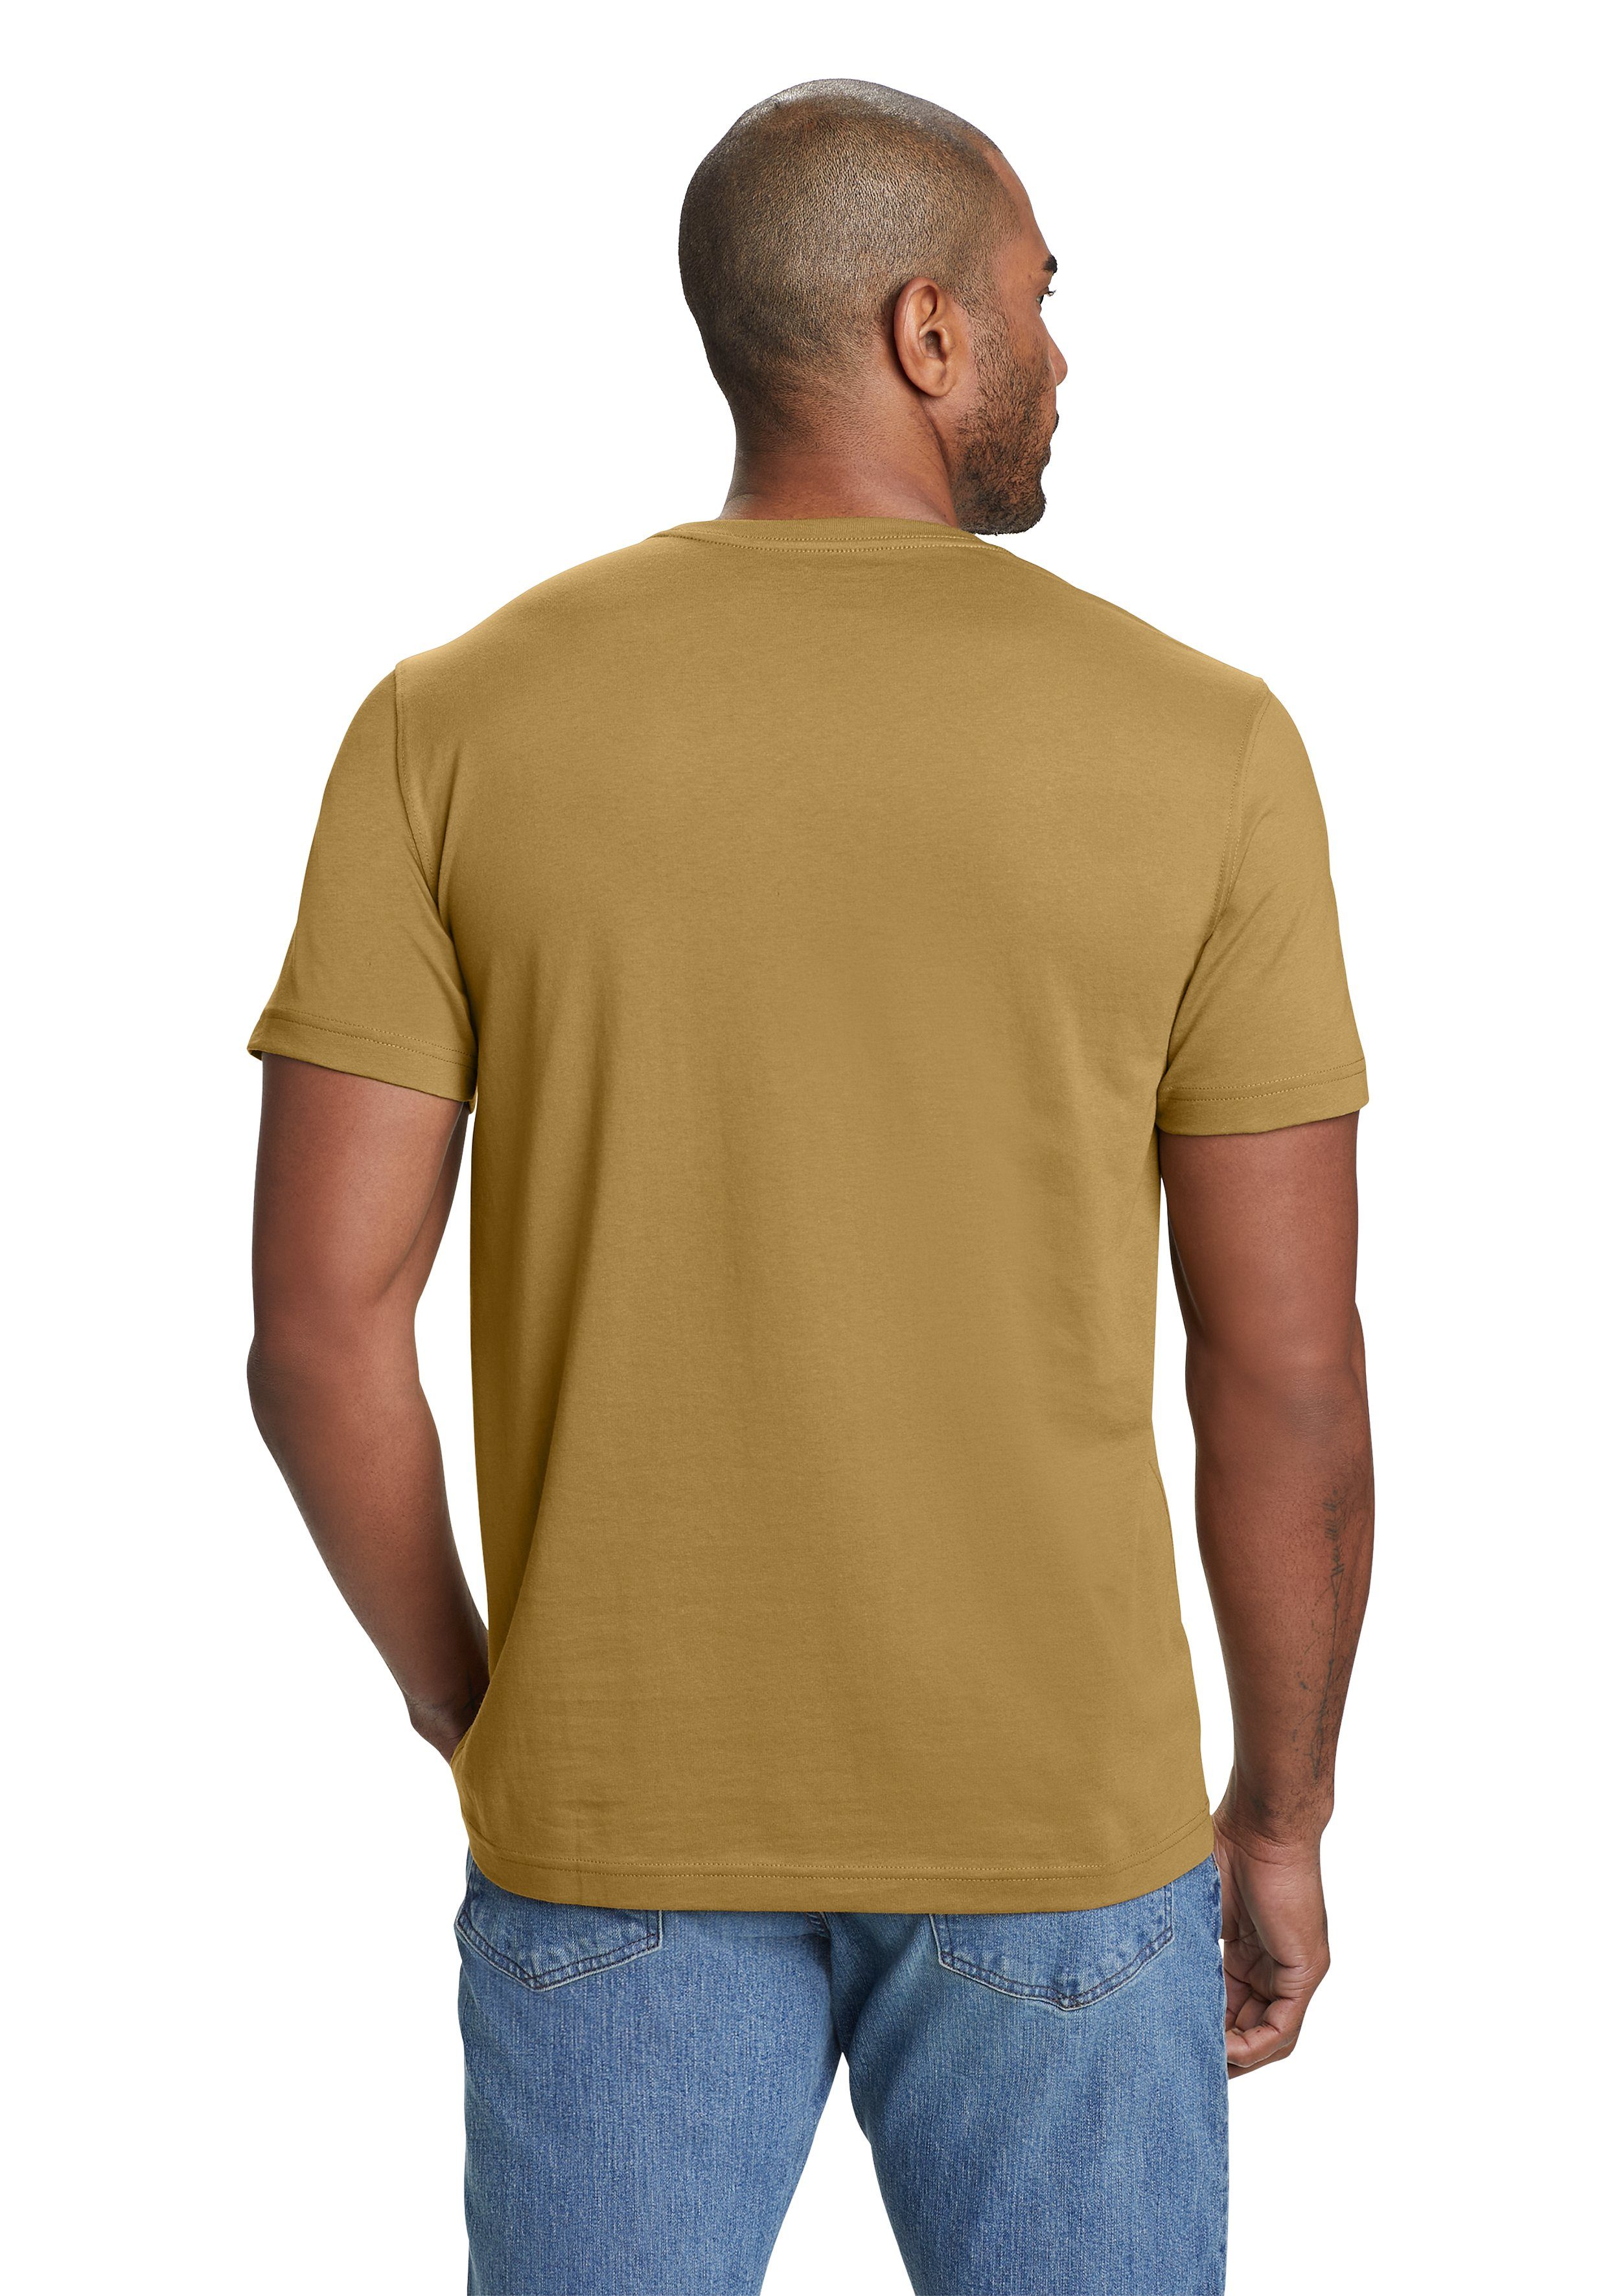 Eddie Bauer T-Shirt T-Shirt Graphic - Protect